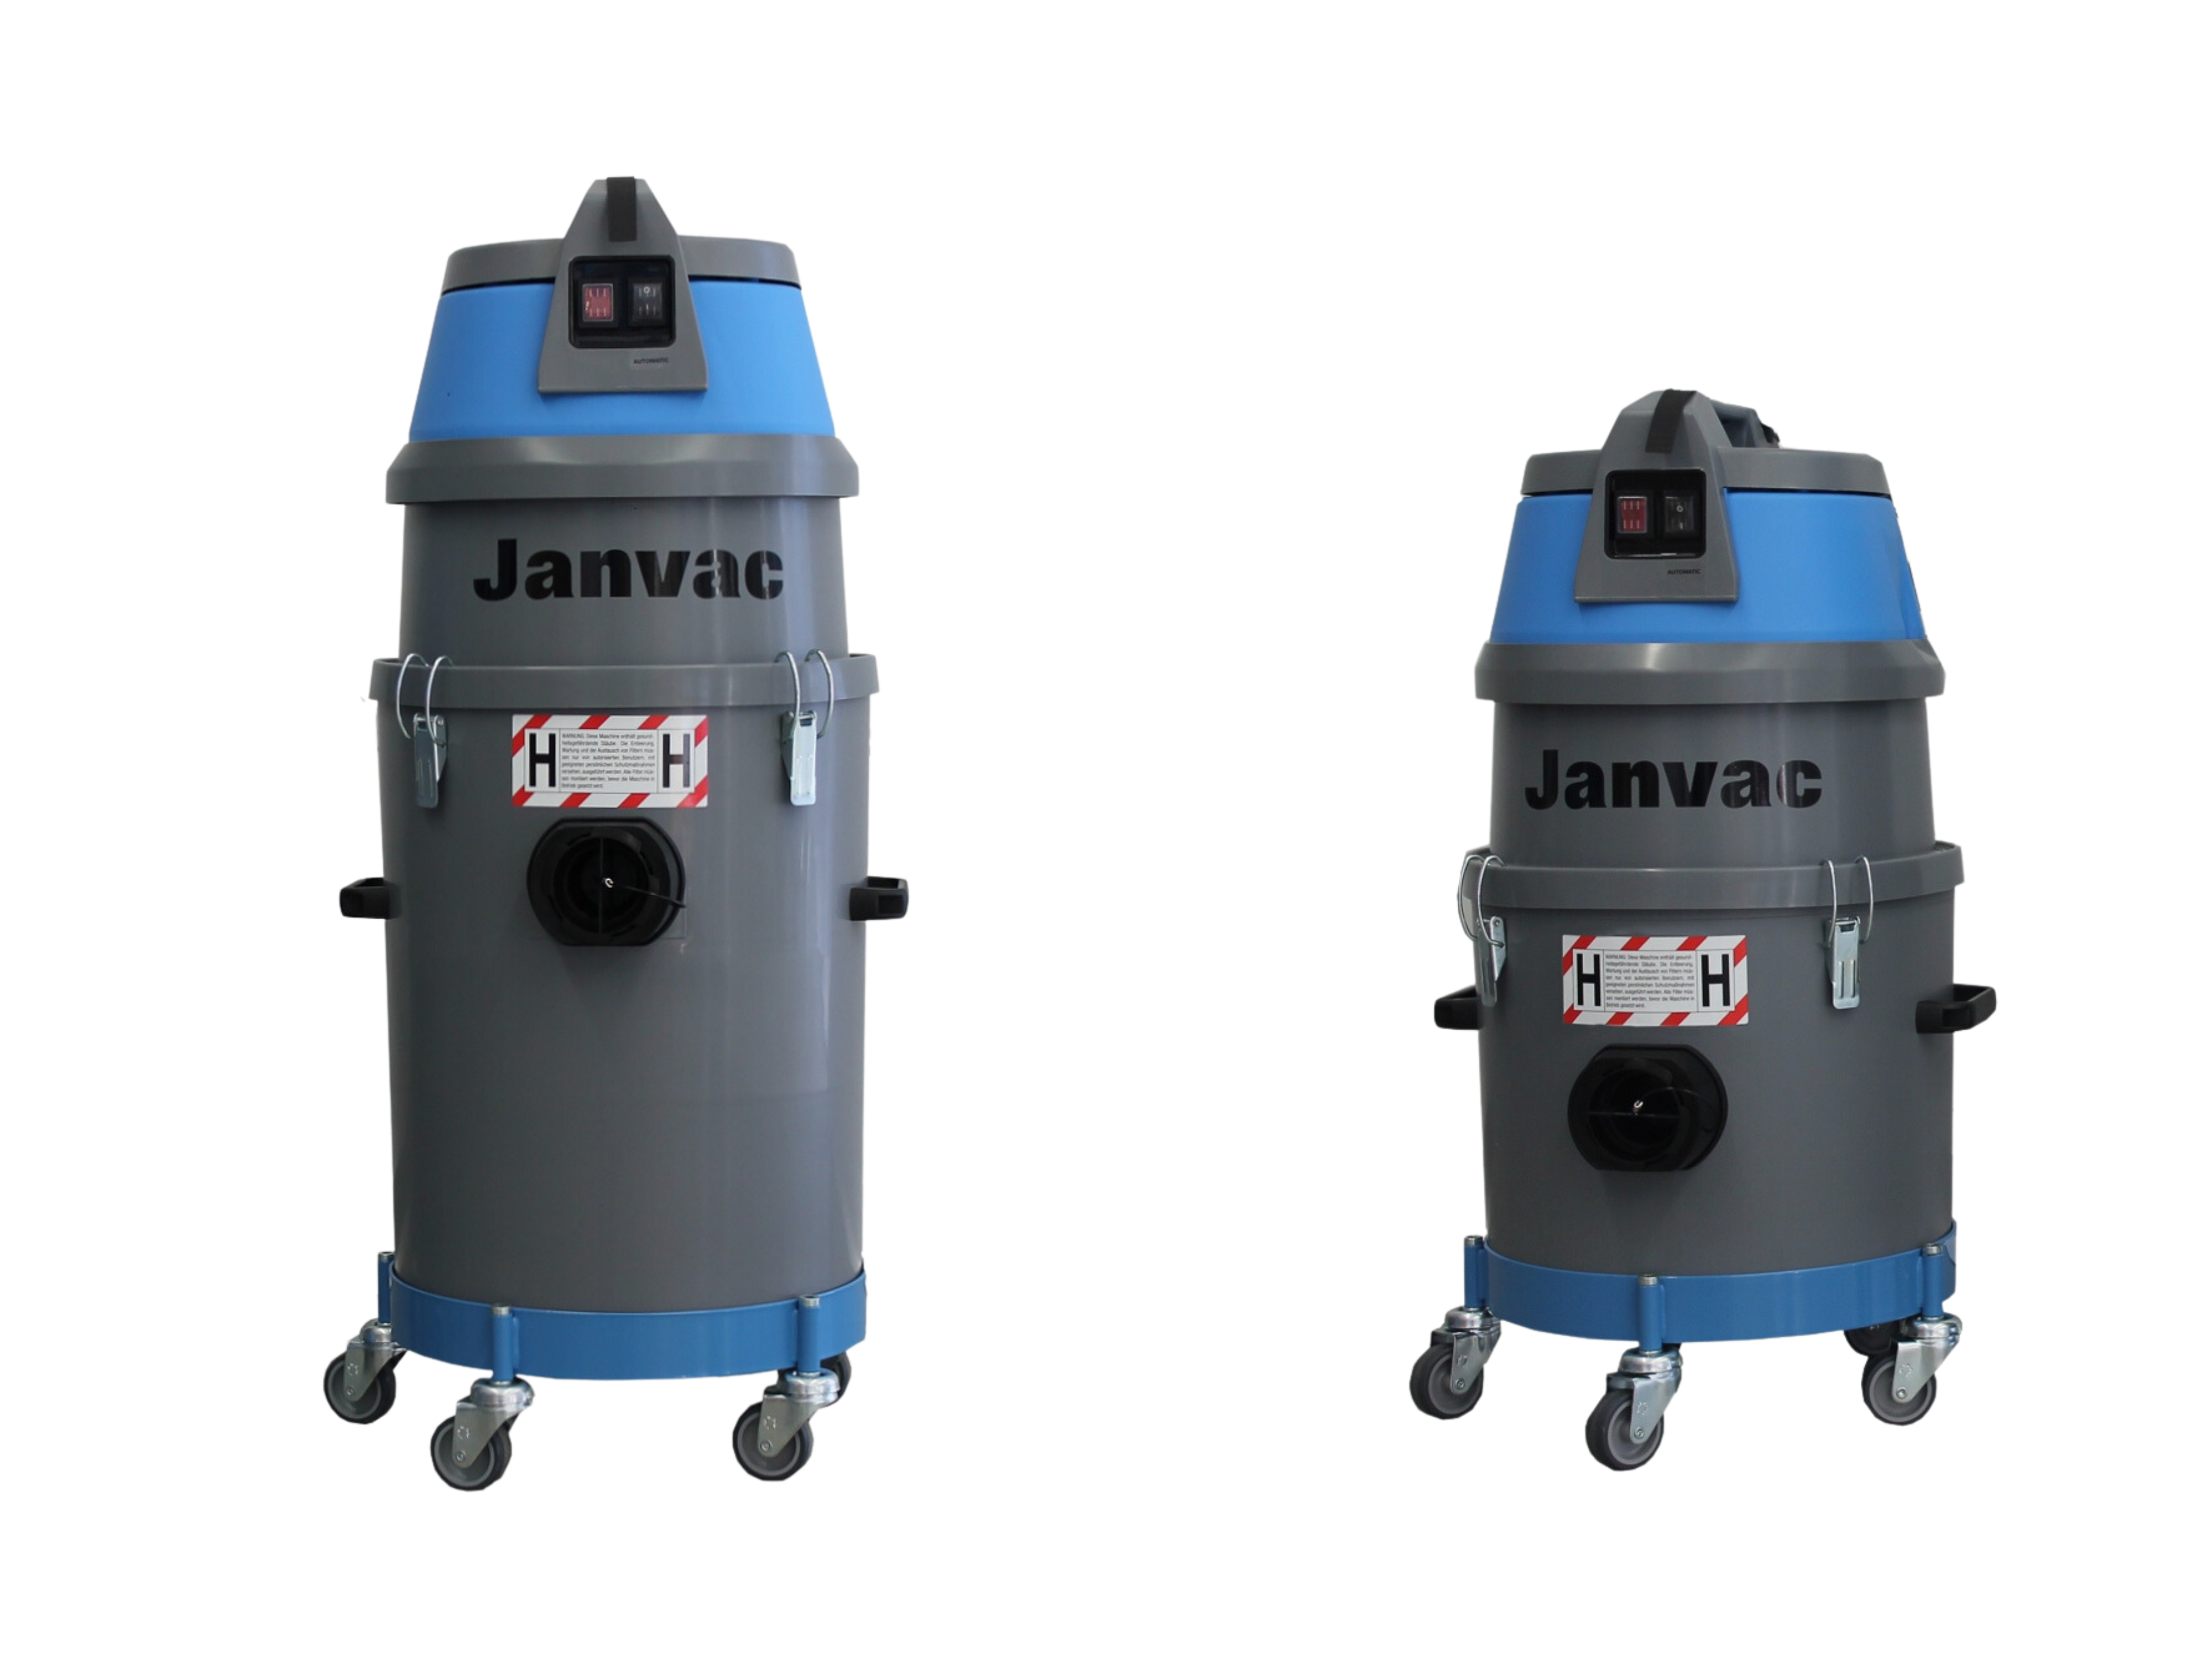 Janvac-Behälter mit Fahrgestell